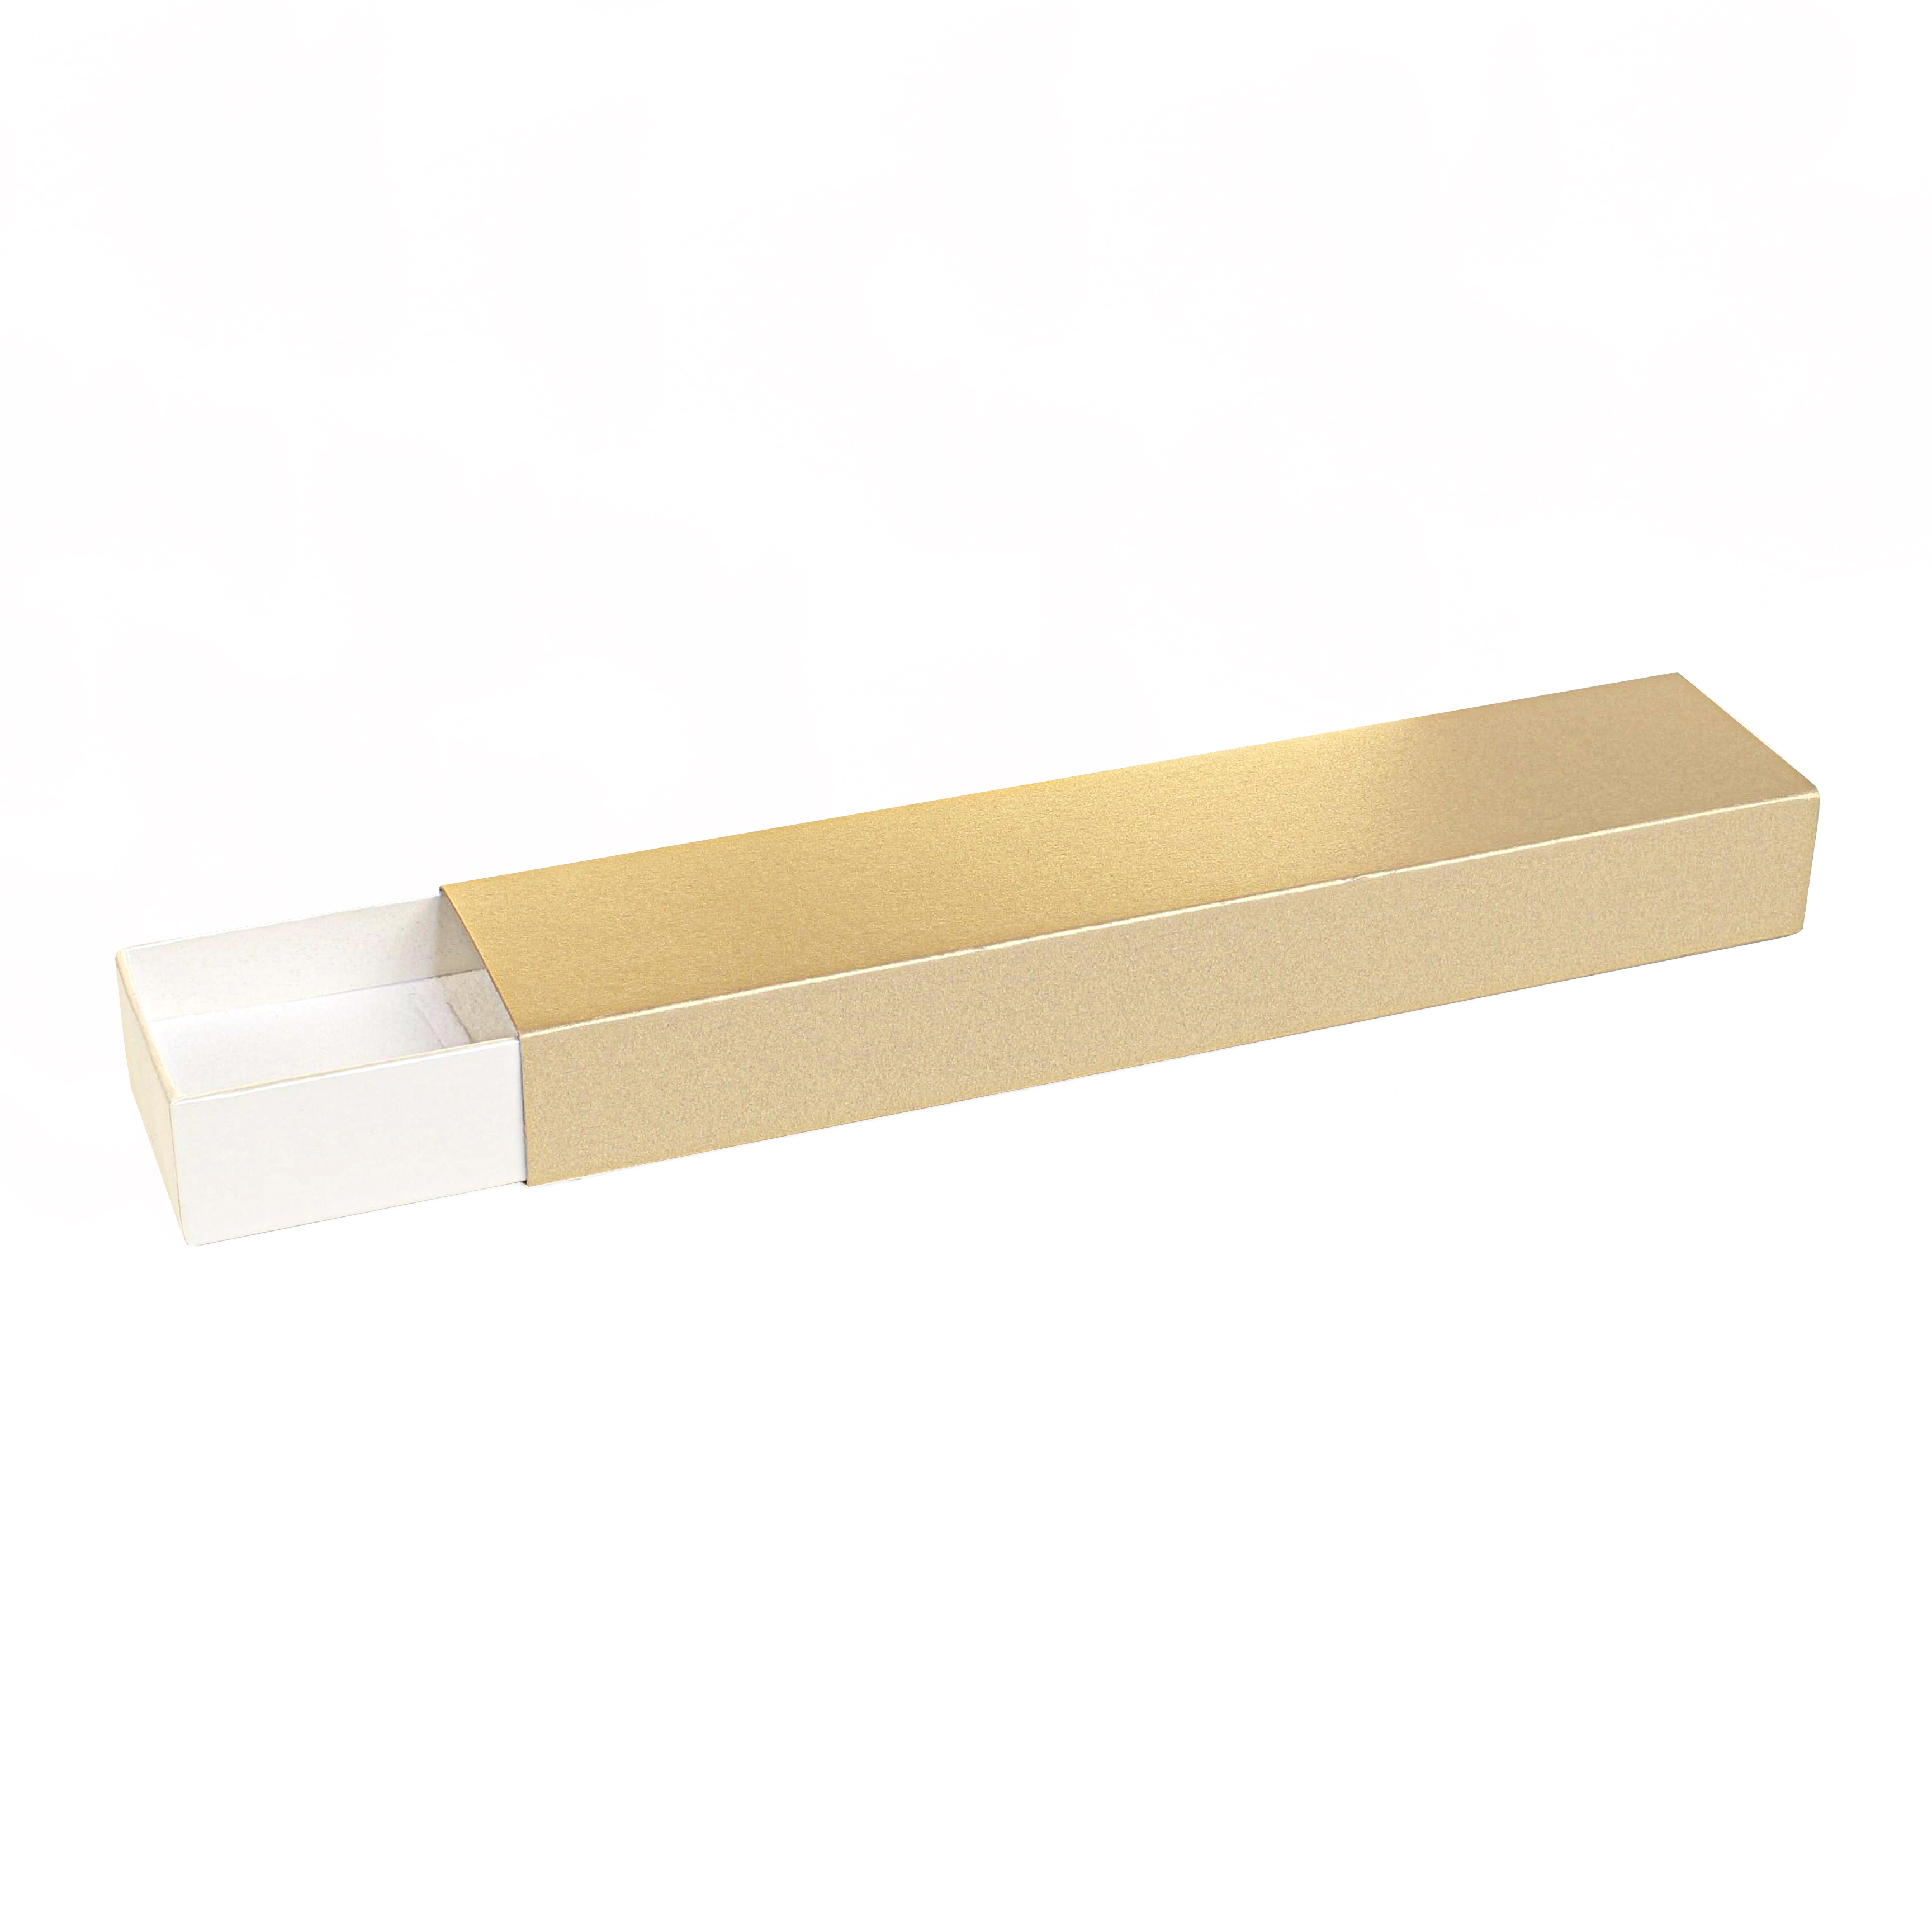 Iridescent gold and cream matchbox style card bracelet box